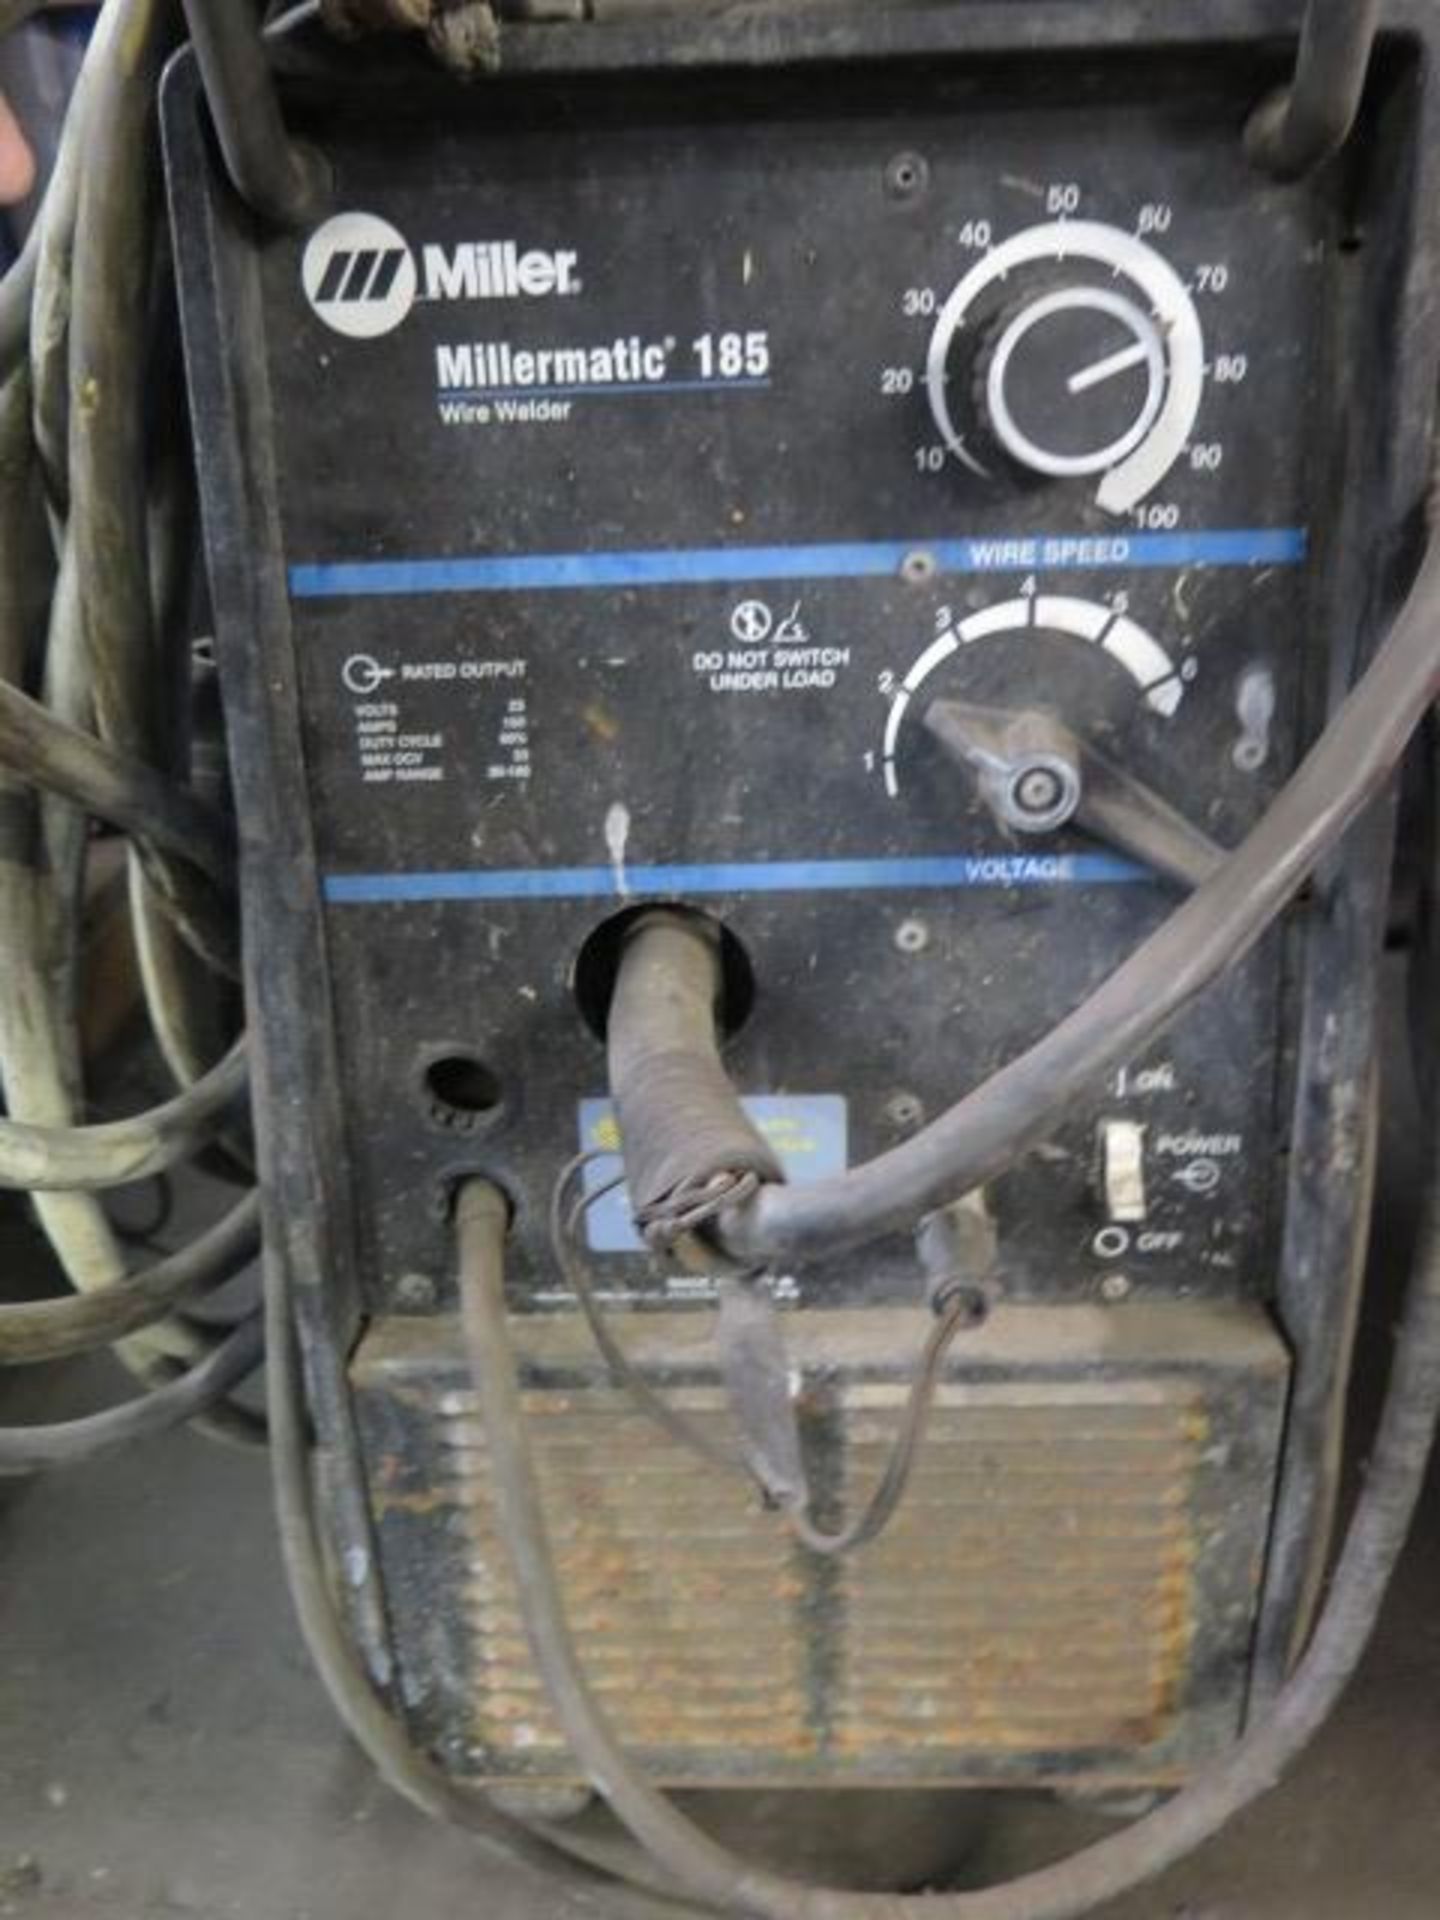 Miller Millermatic 185 Arc Welding Power Source (SOLD AS-IS - NO WARRANTY) - Image 6 of 7